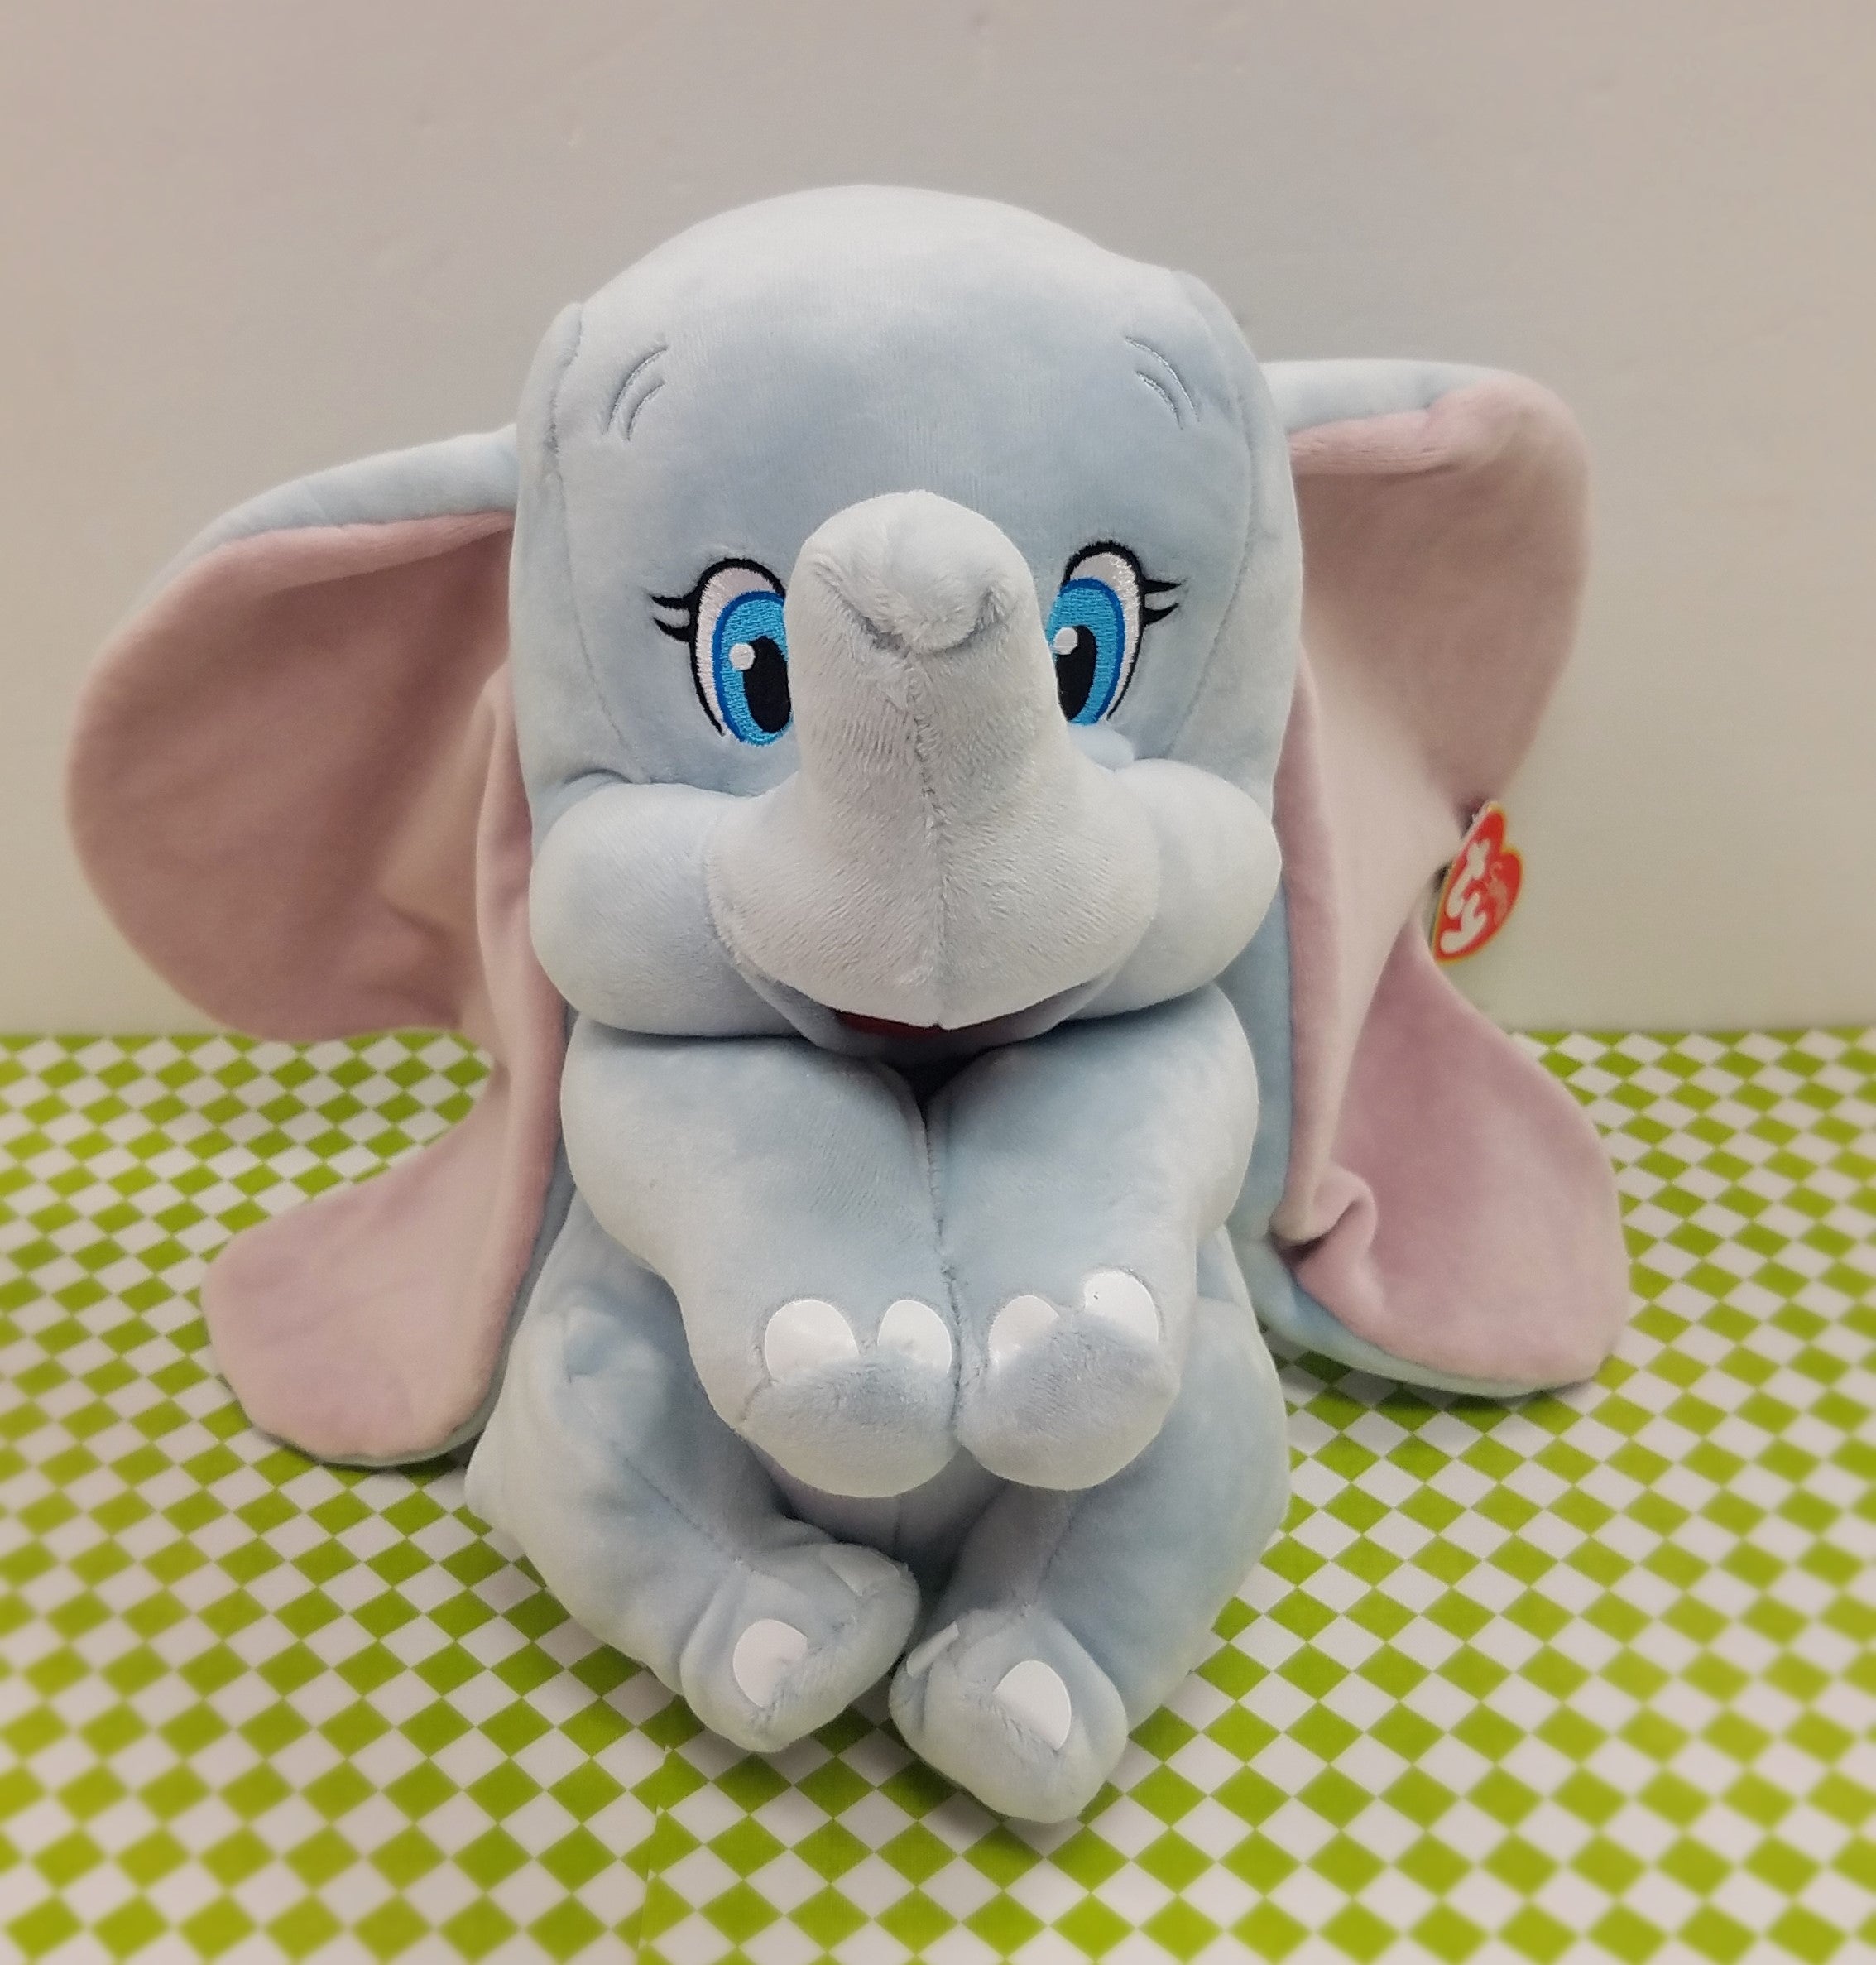 TY Dumbo the Elephant Beanie baby